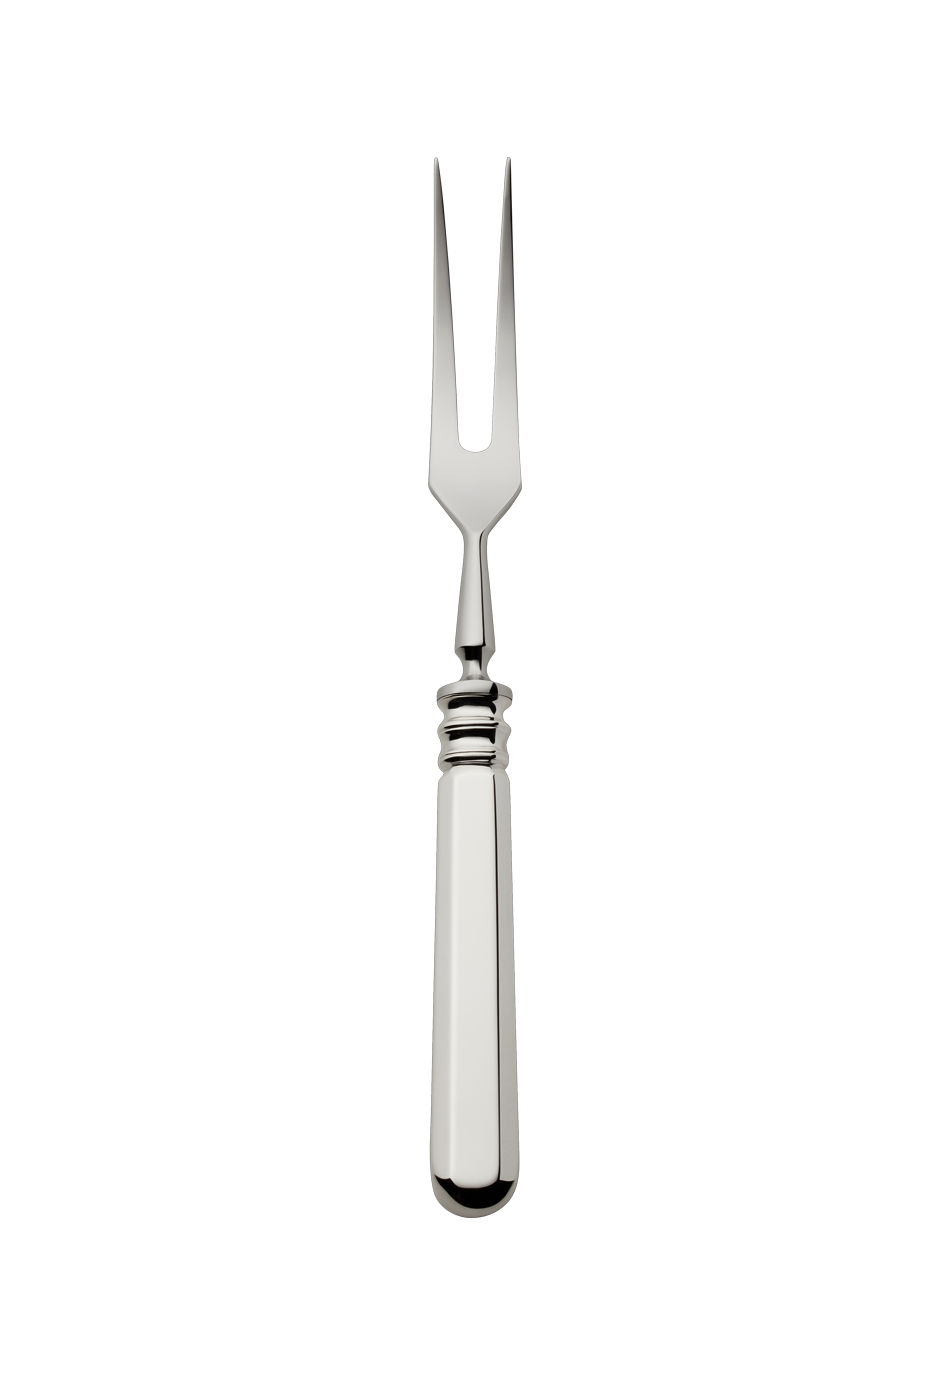 Alt-Spaten Carving Fork (150g massive silverplated)